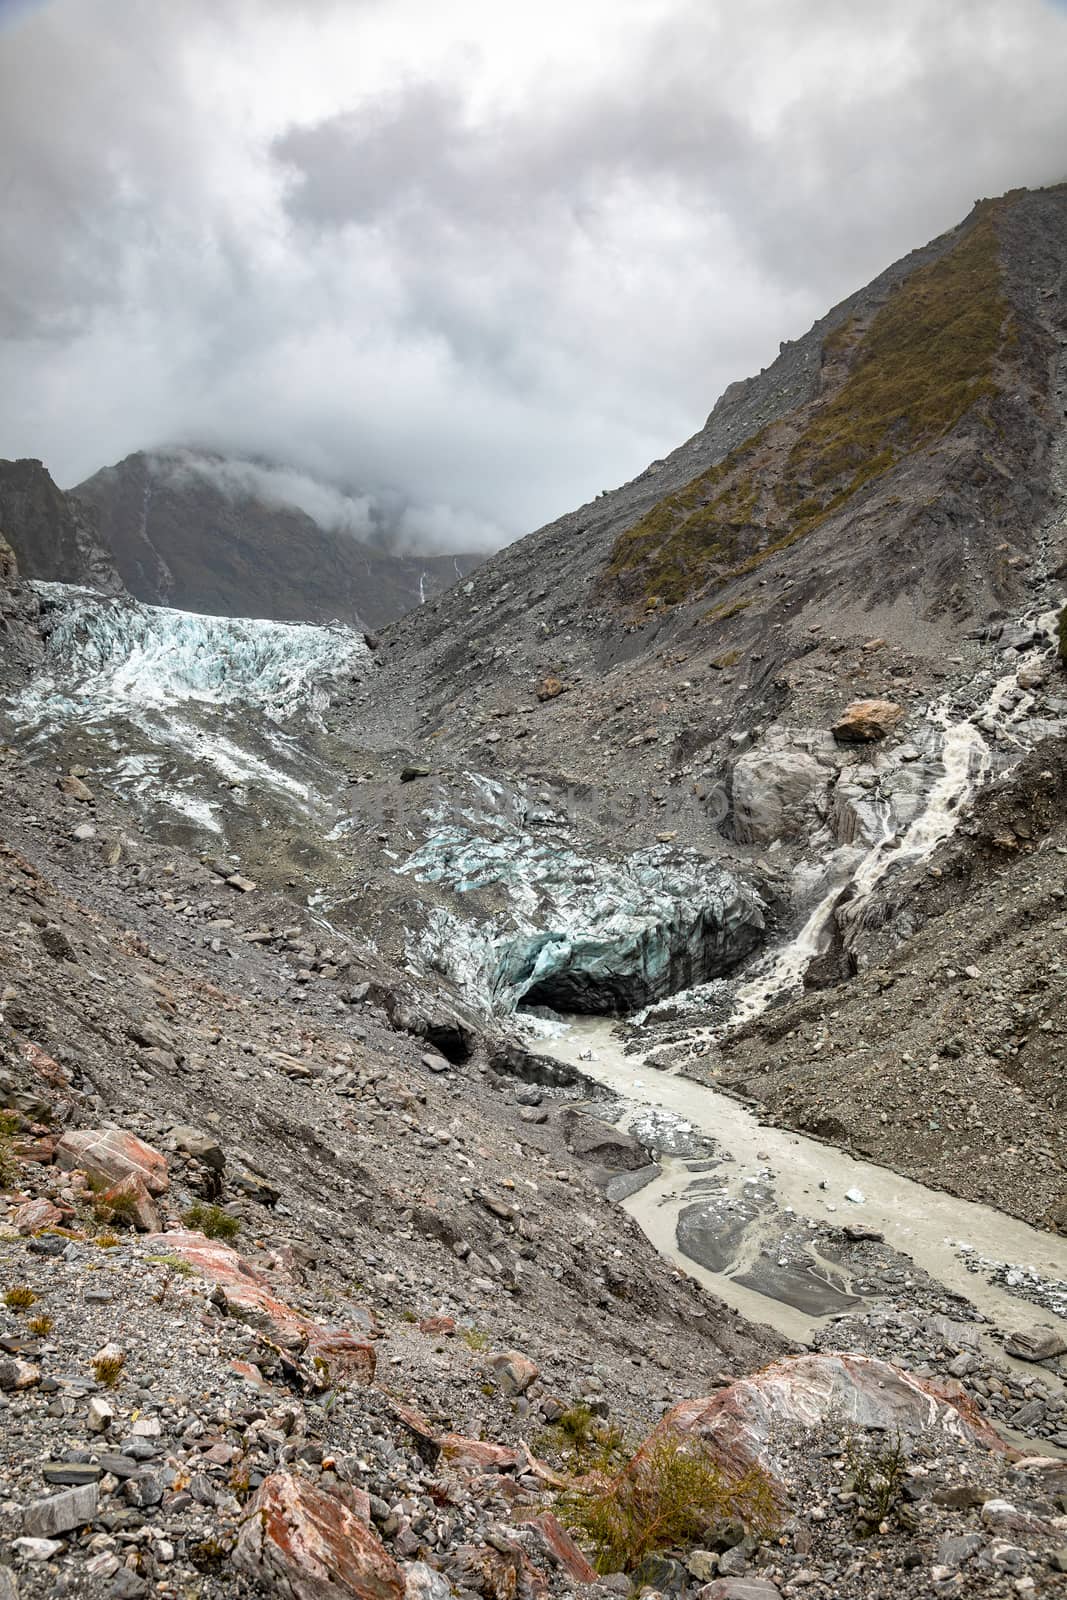 An image of the Franz Josef Glacier, New Zealand